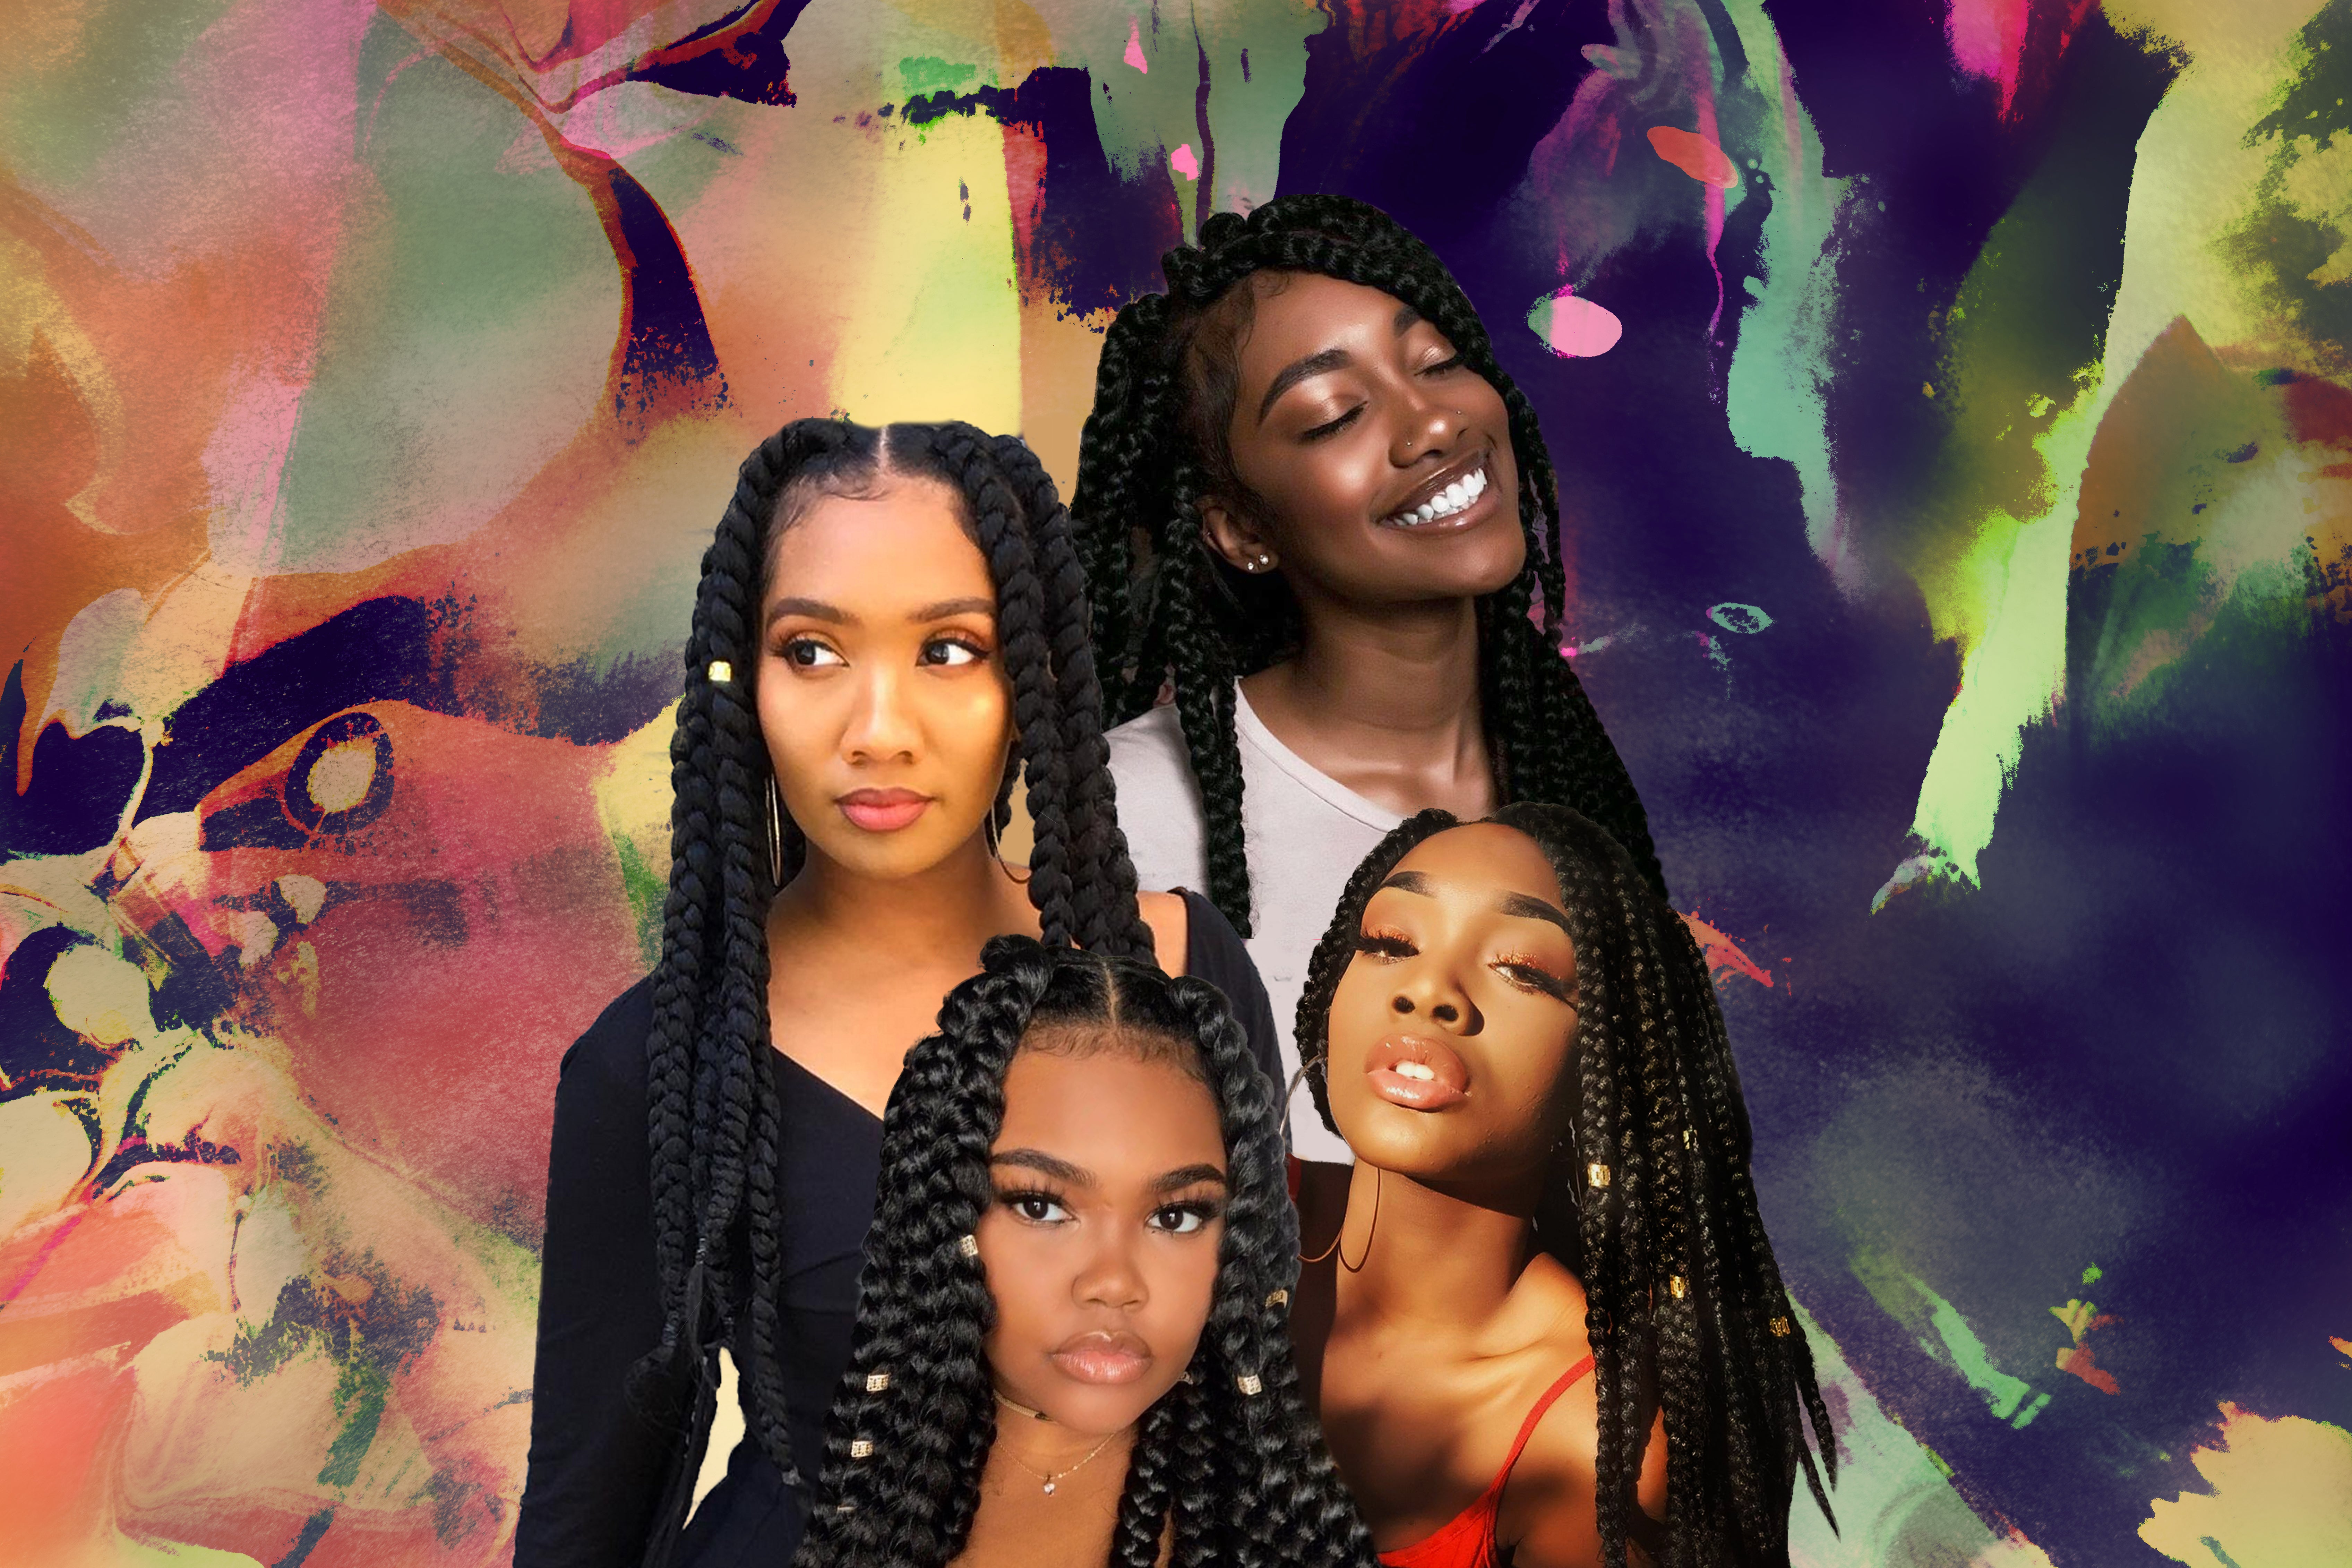 25 Beautiful Black Women Show Us How To Slay In Jumbo Braids